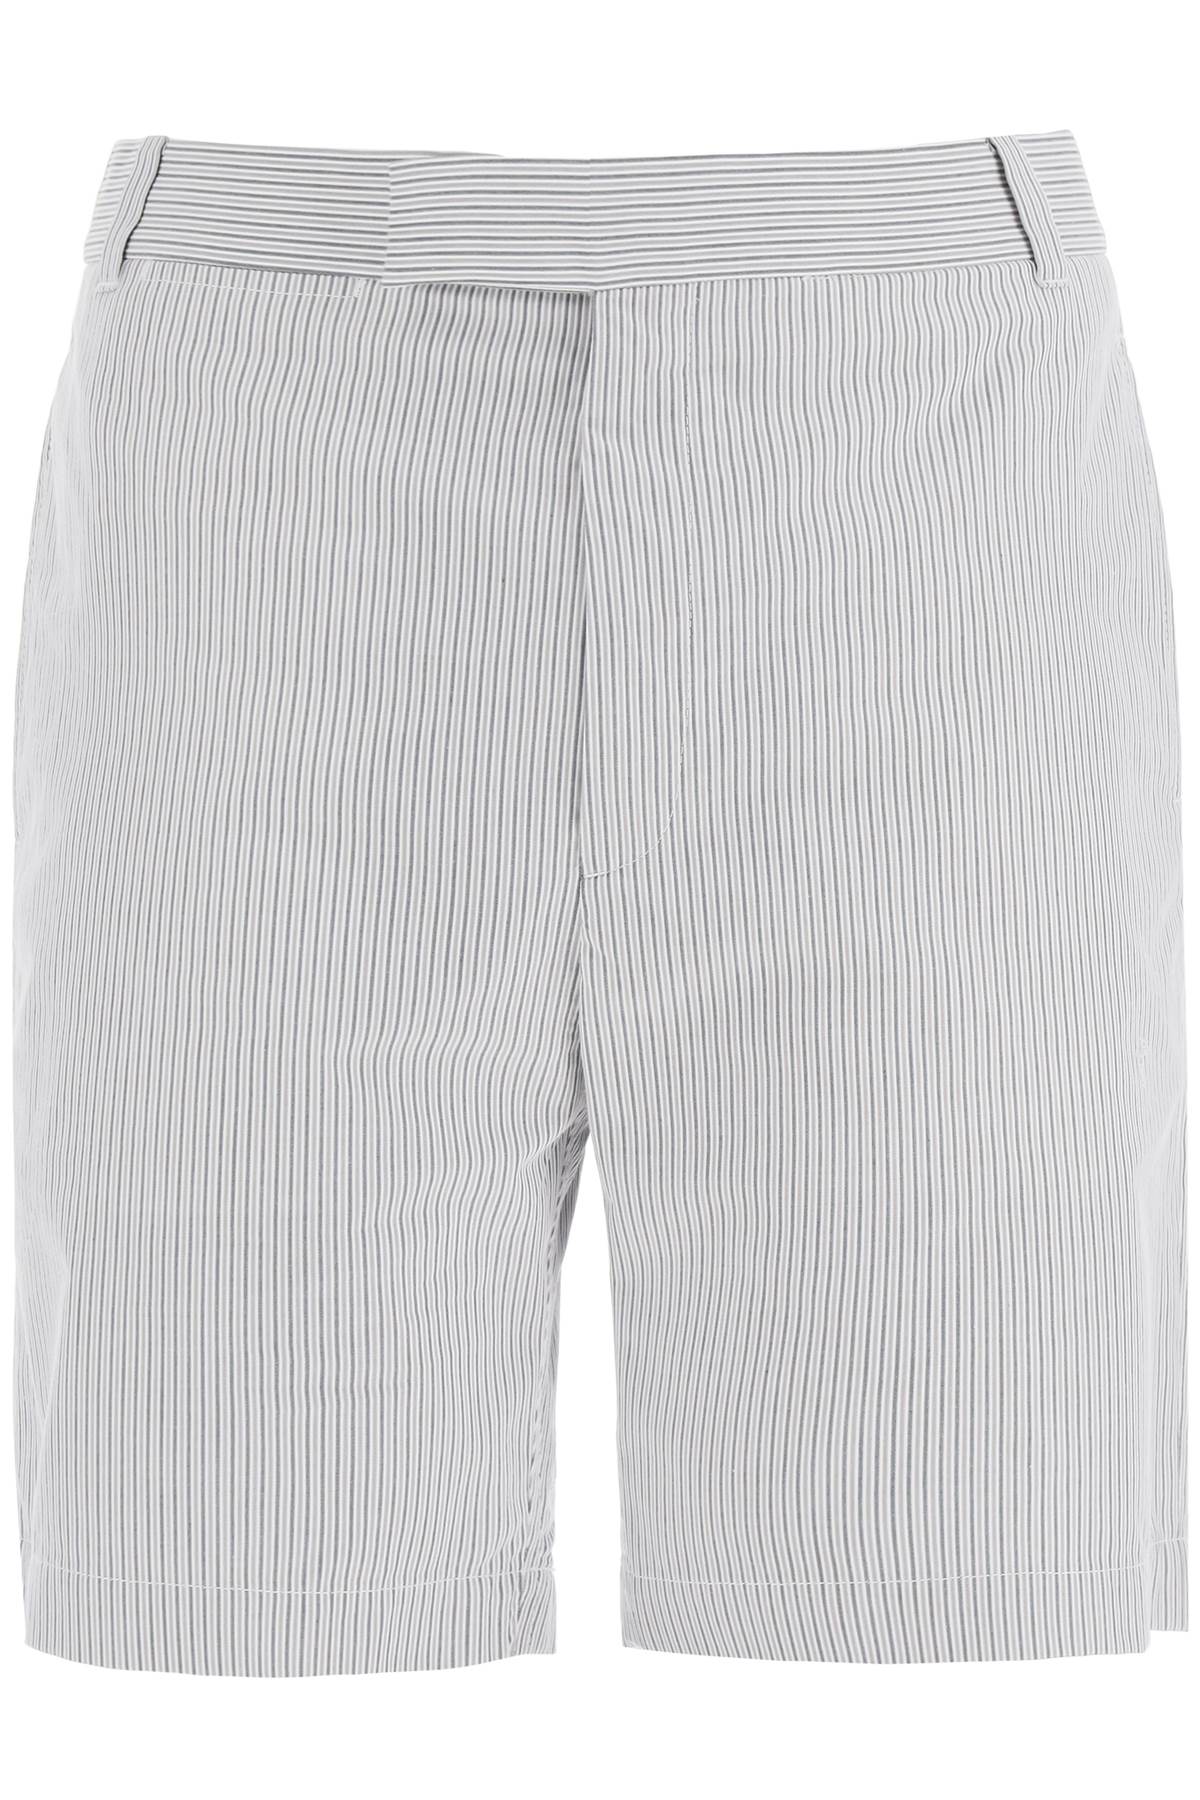 striped cotton bermuda shorts for men MTU321UF0591 MED GREY